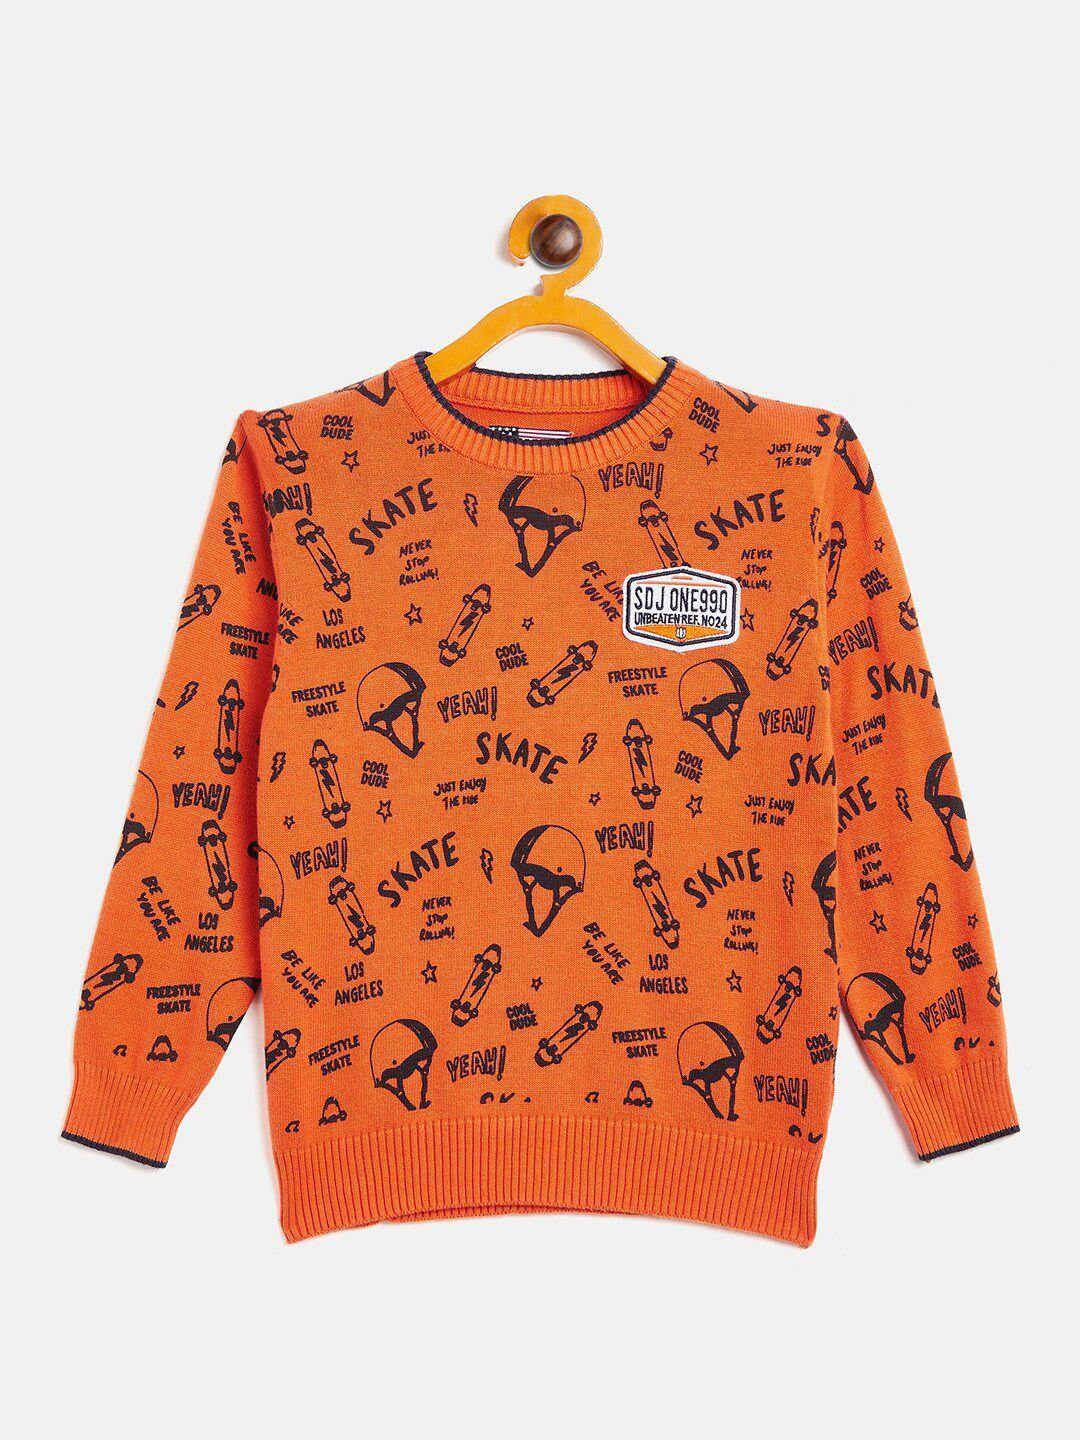 duke boys orange & navy blue acrylic printed pullover sweater